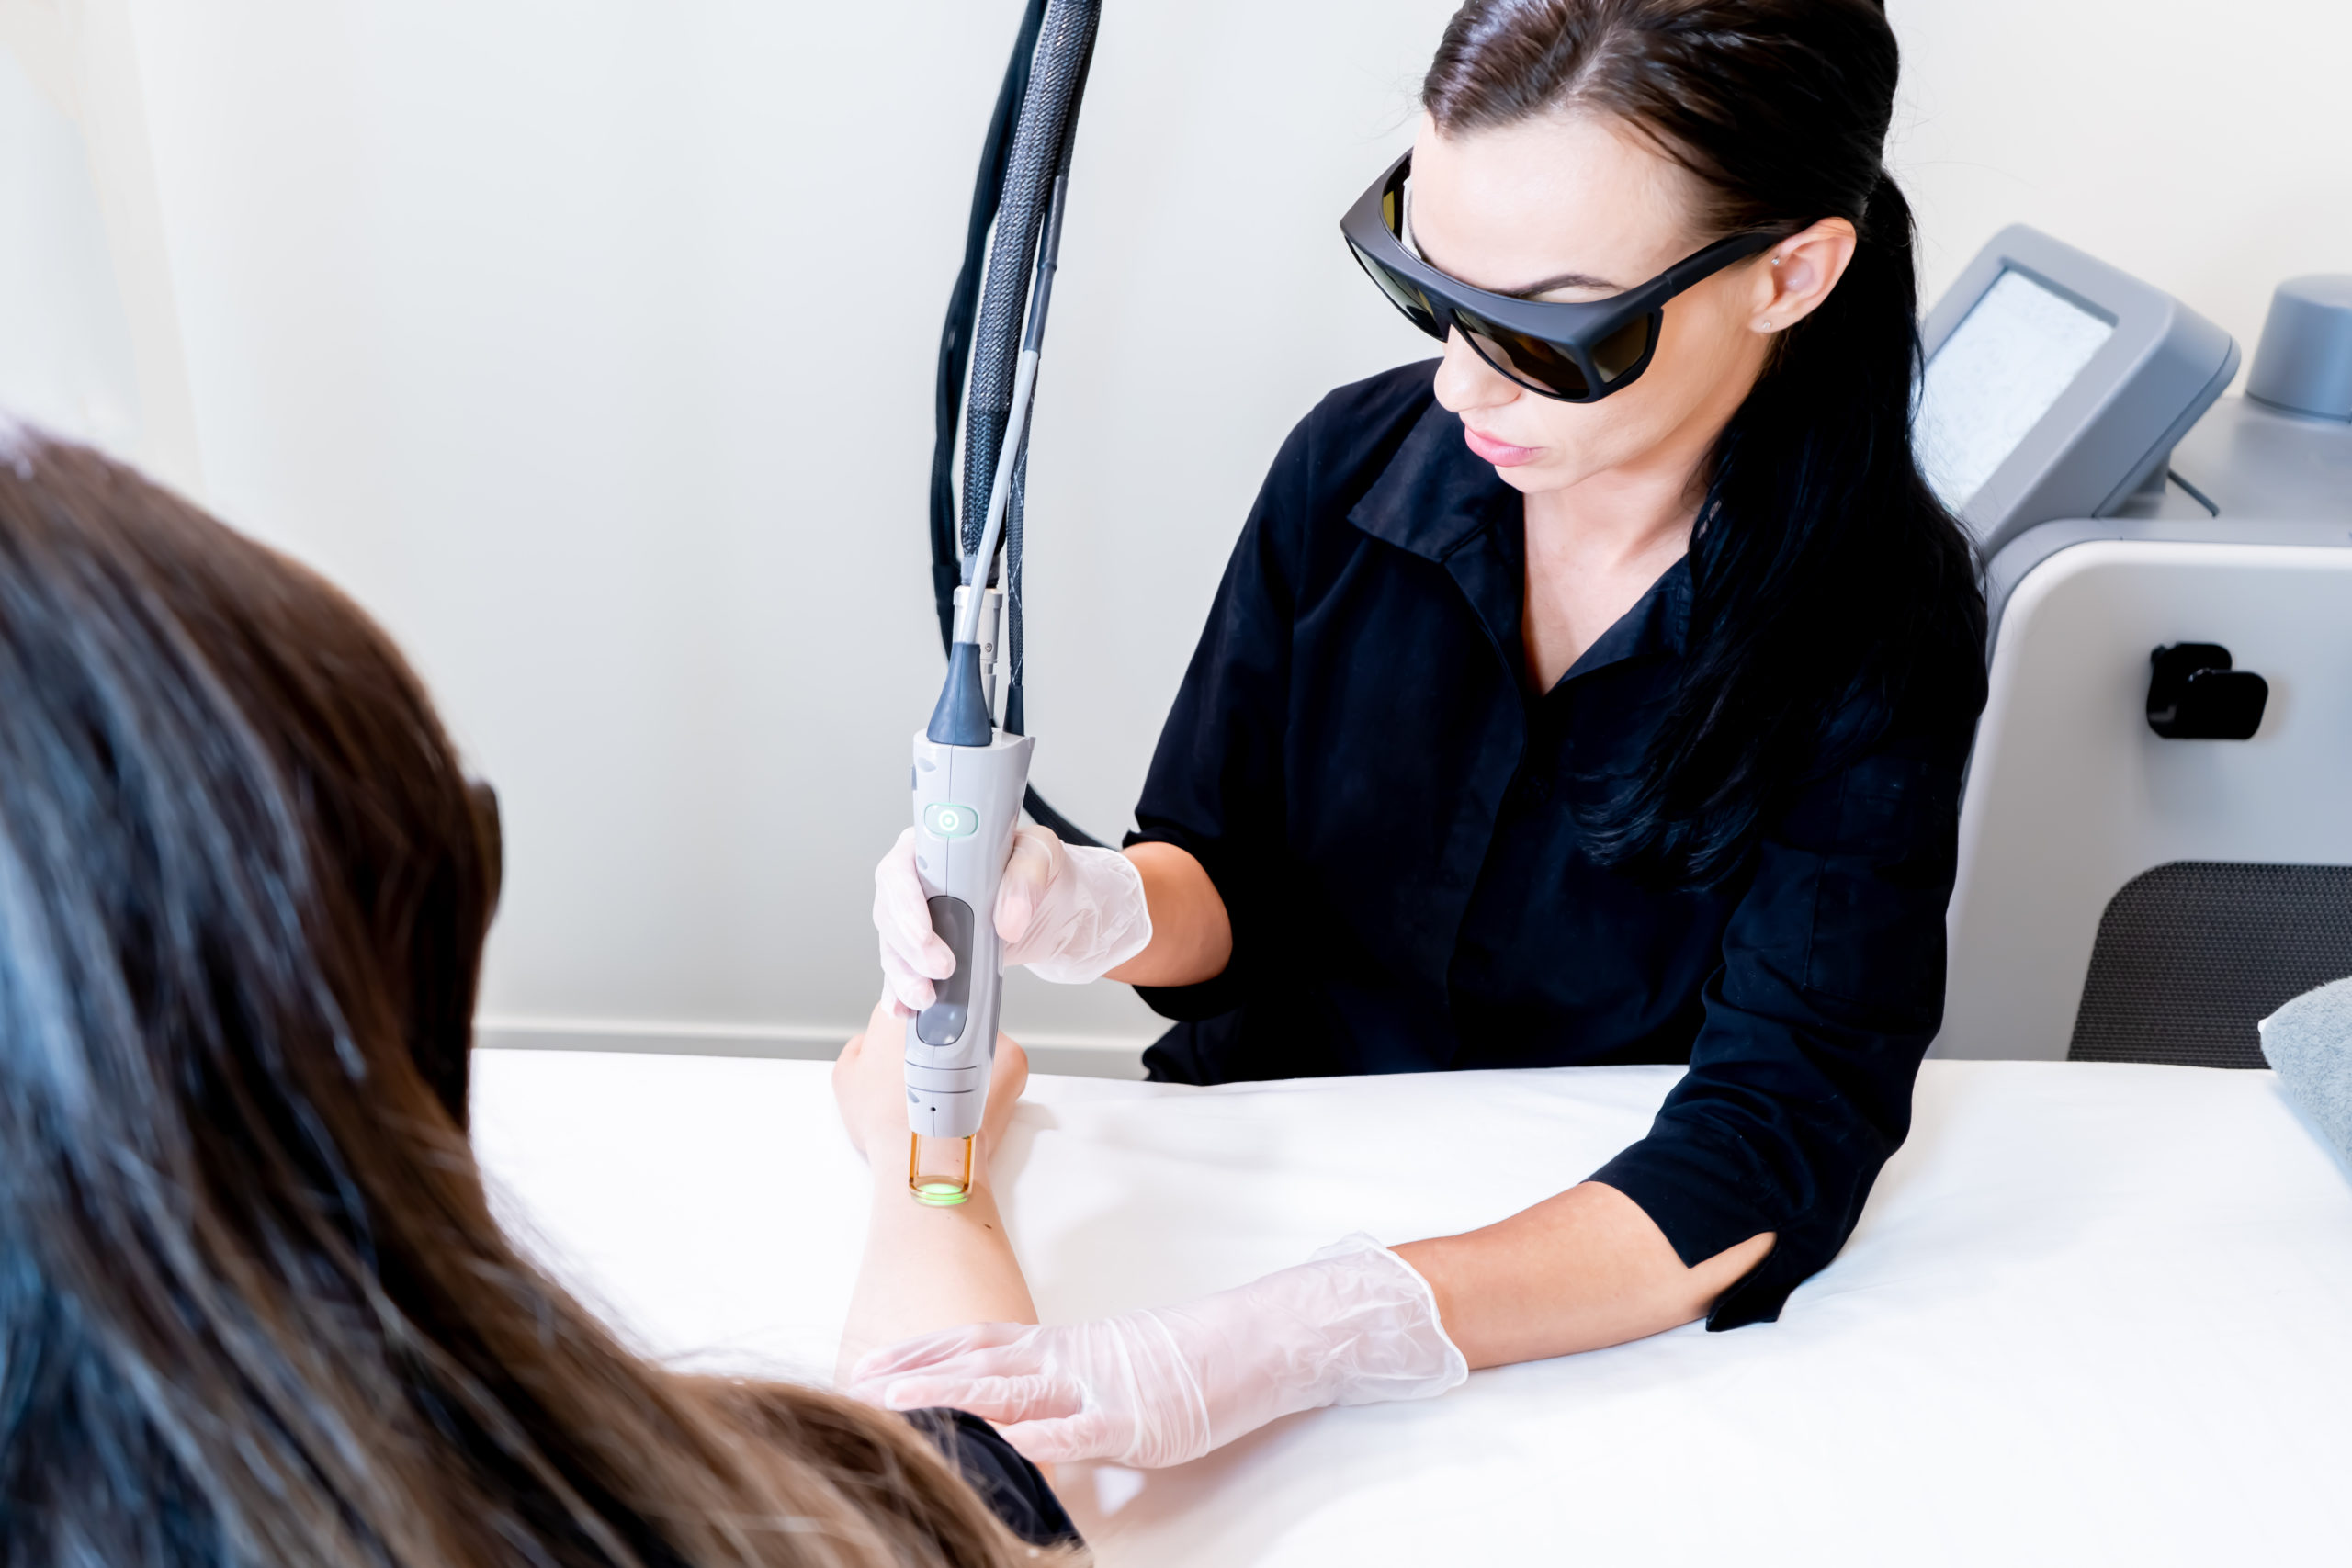 Senior Laser Hair Removal Technician – Advanced Laser Institute